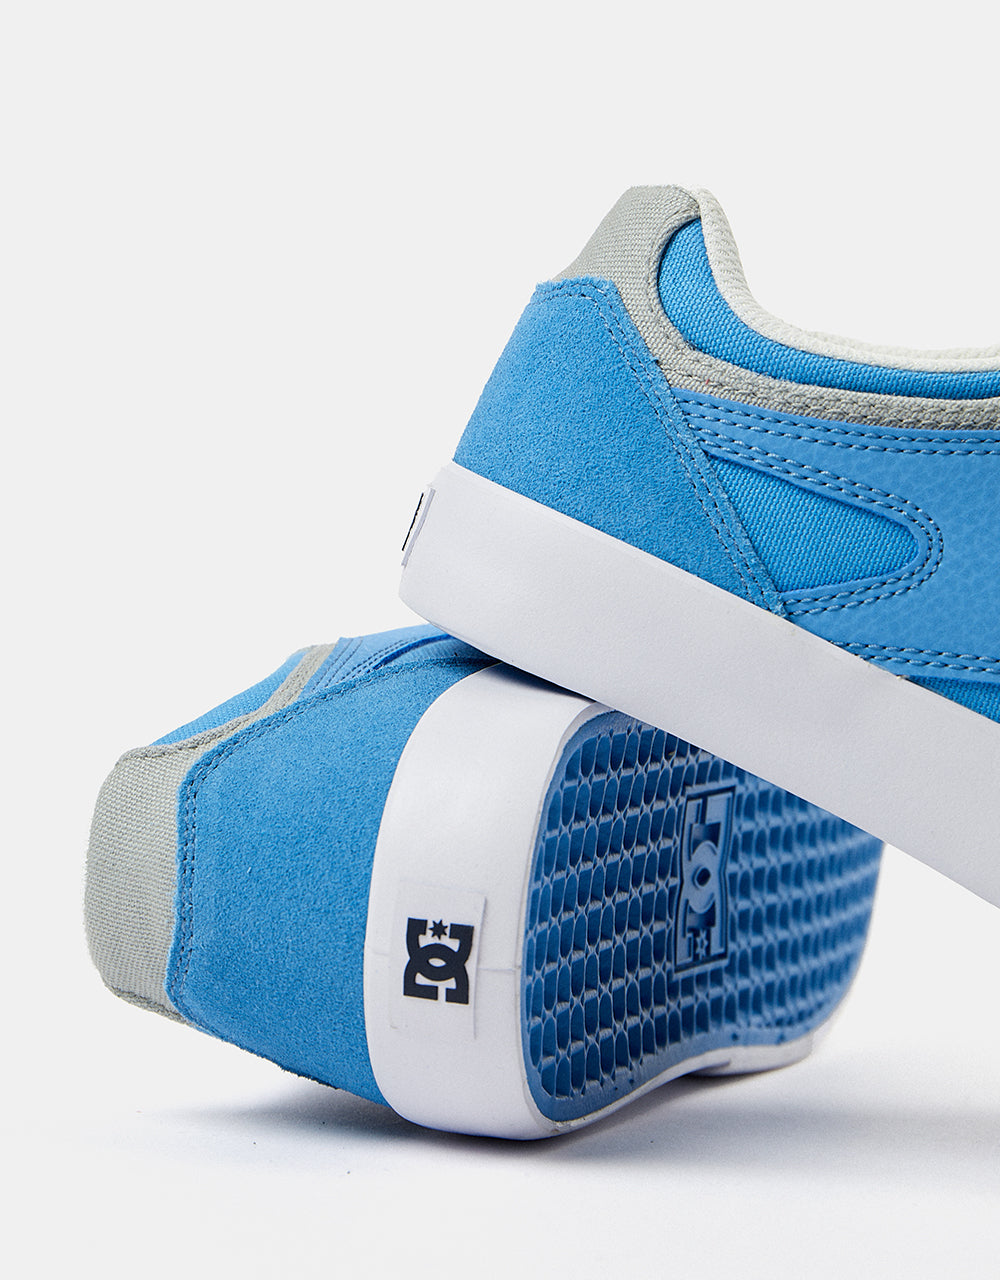 DC Kalis Vulc S Skate Shoes - Blue